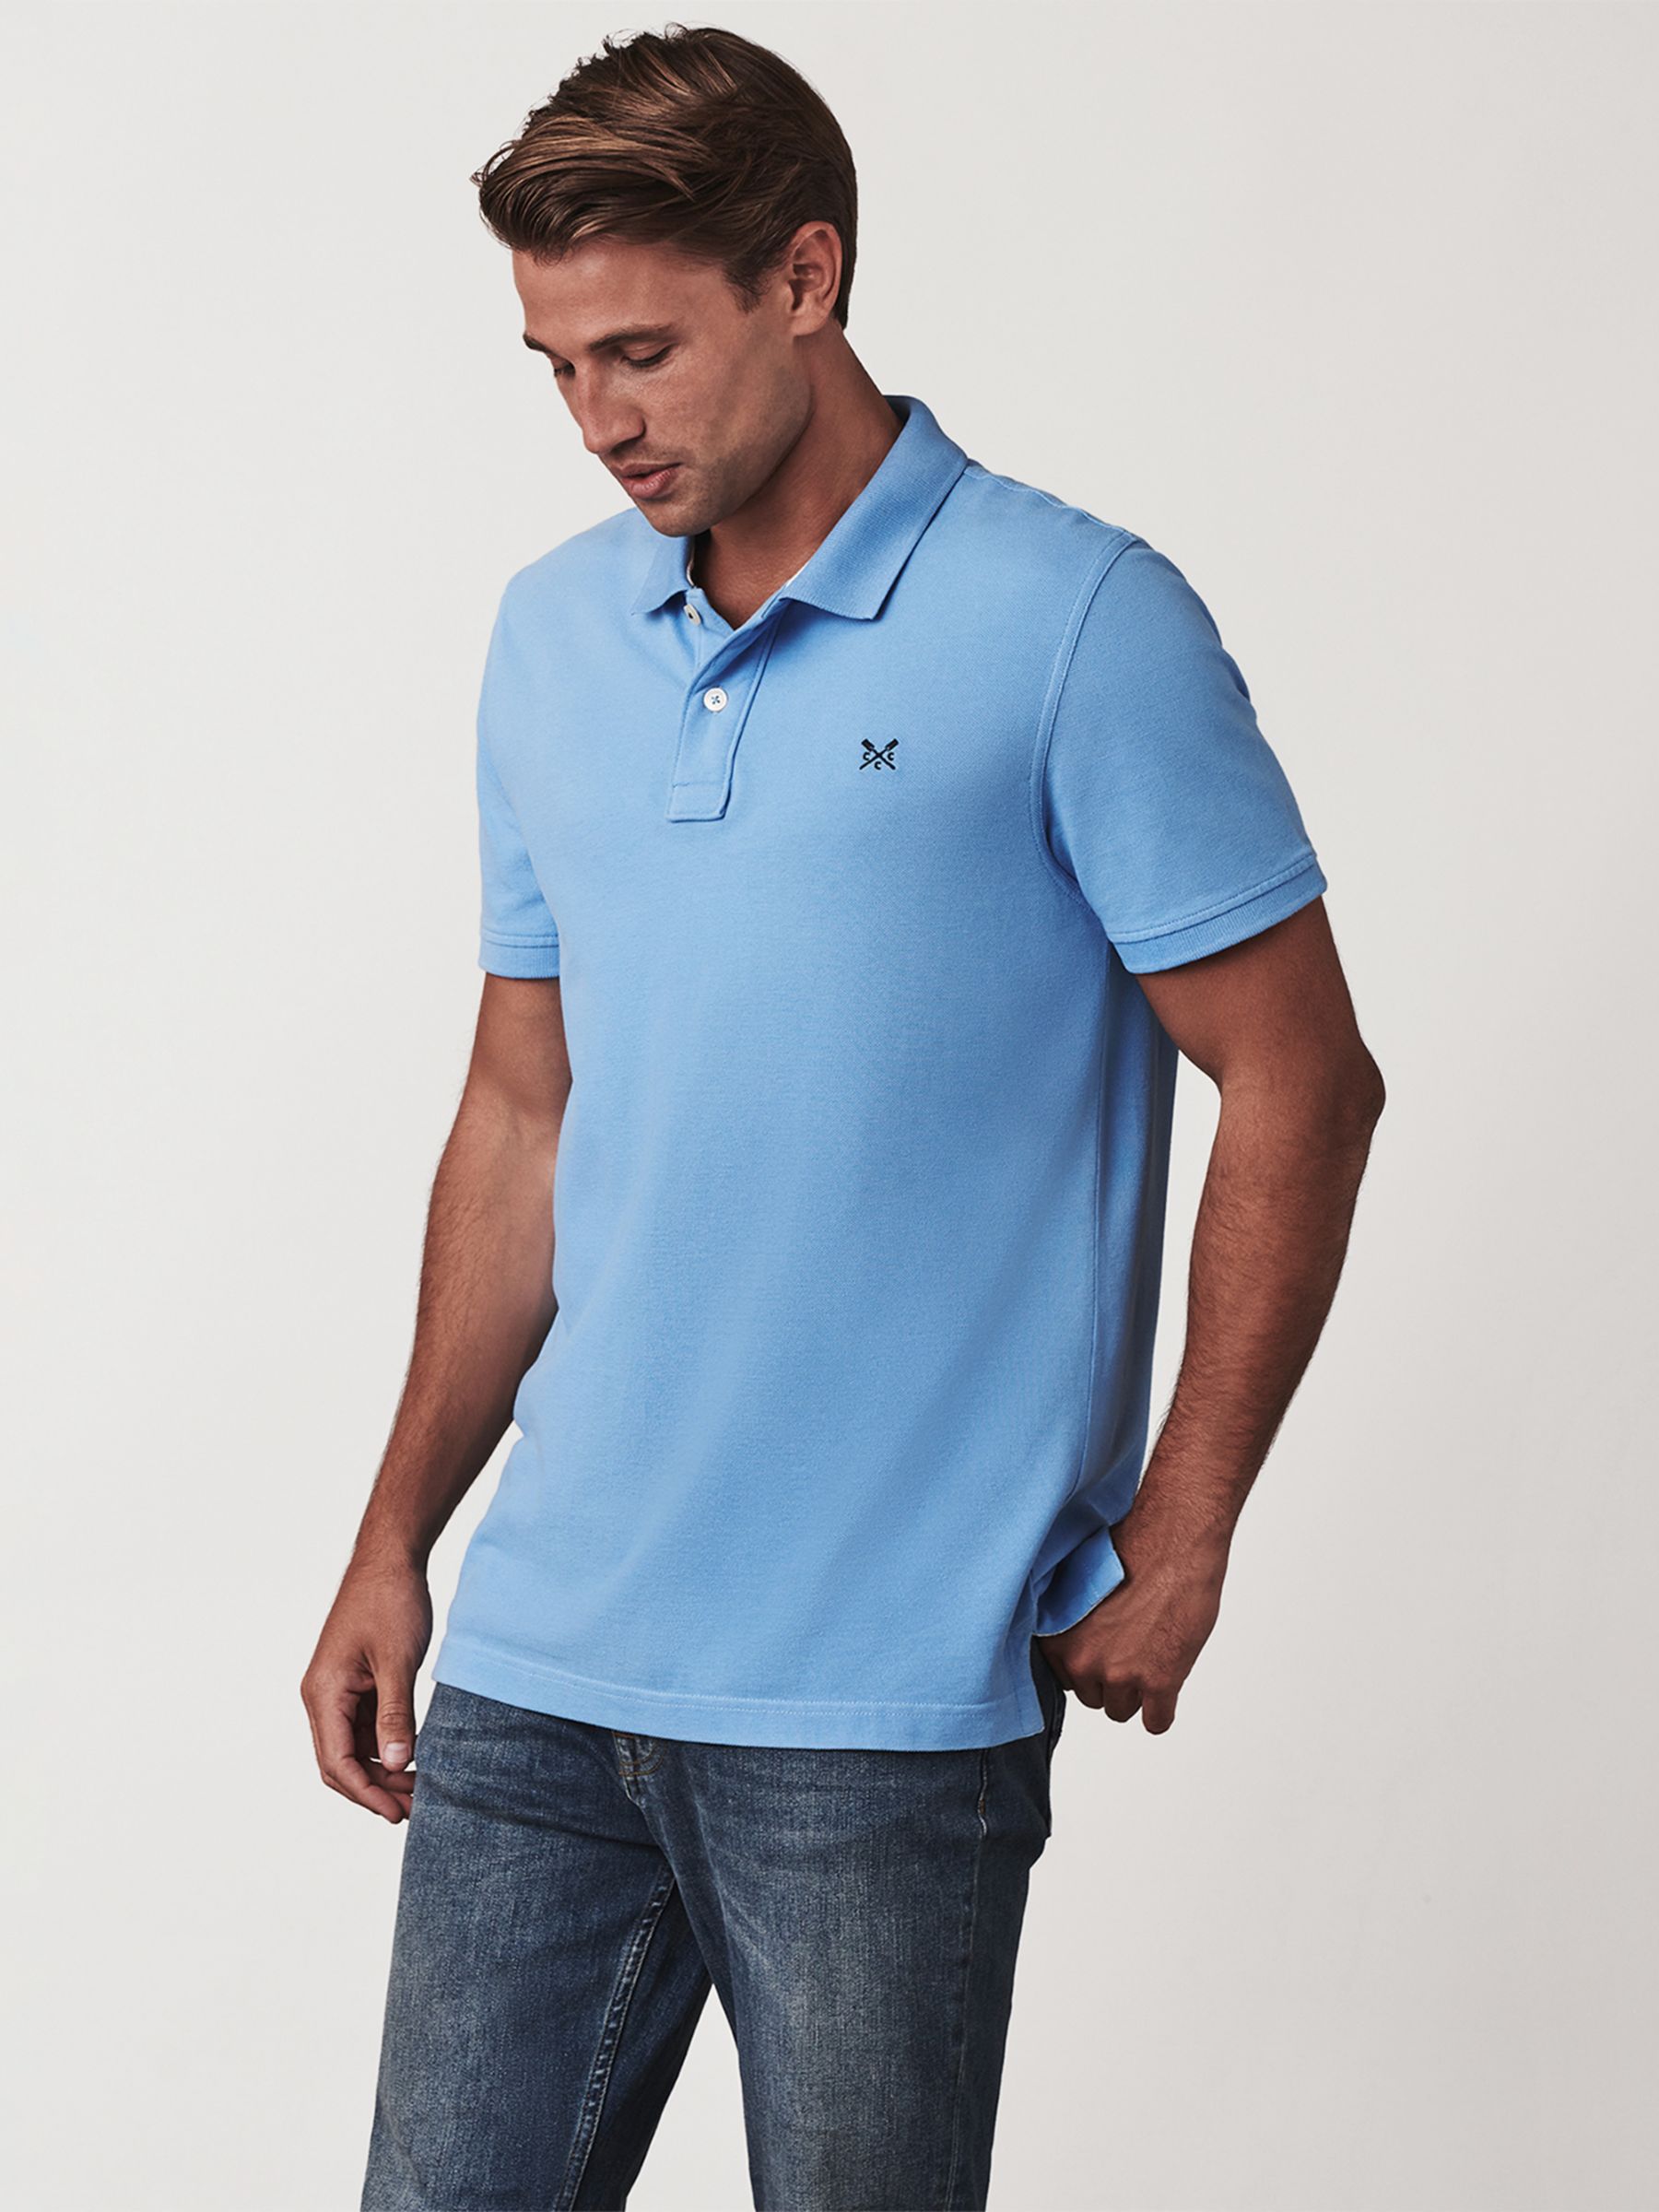 Crew Clothing Classic Pique Polo Shirt, Bright Blue, XS